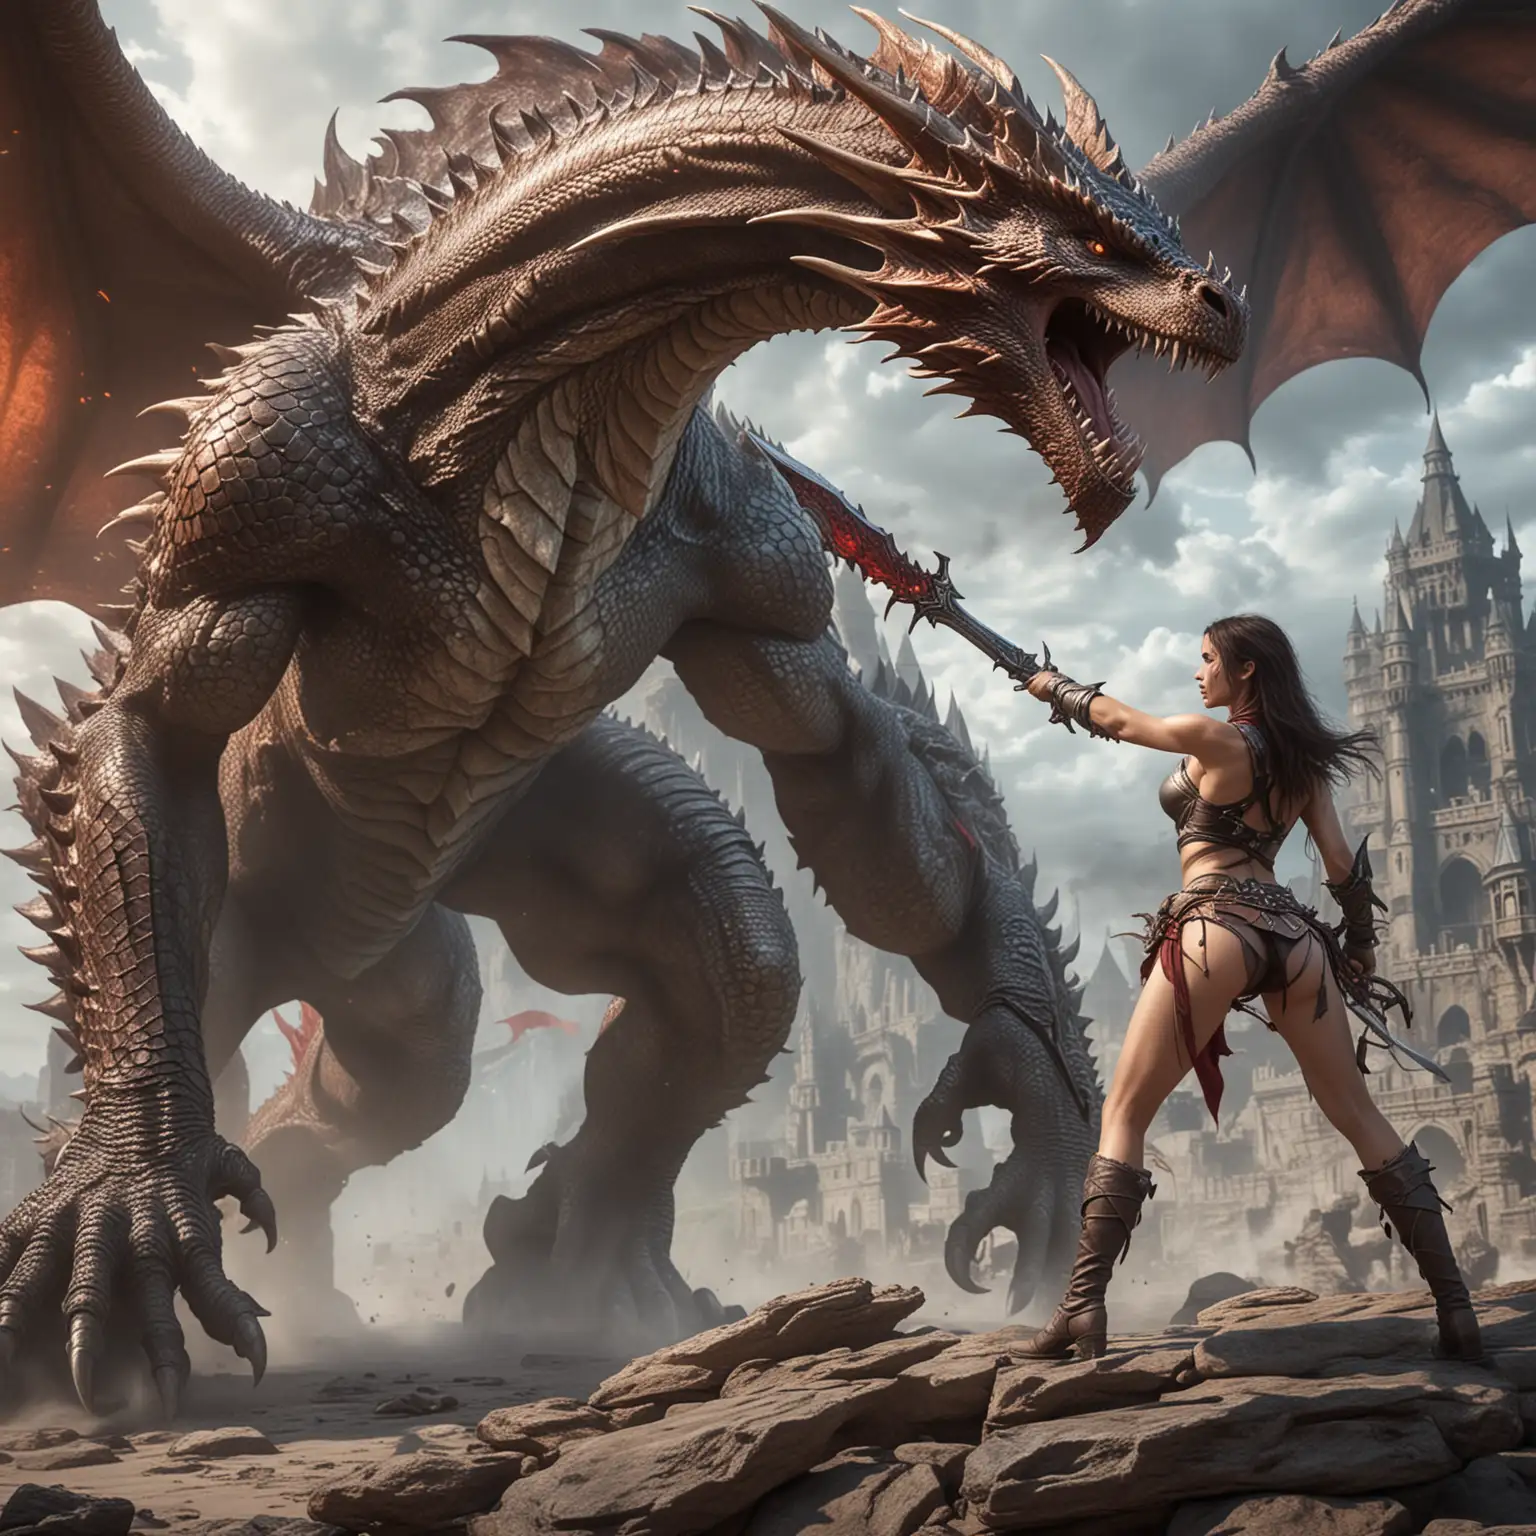 Courageous Female Dragon Slayer Confronts Monstrous Dragon